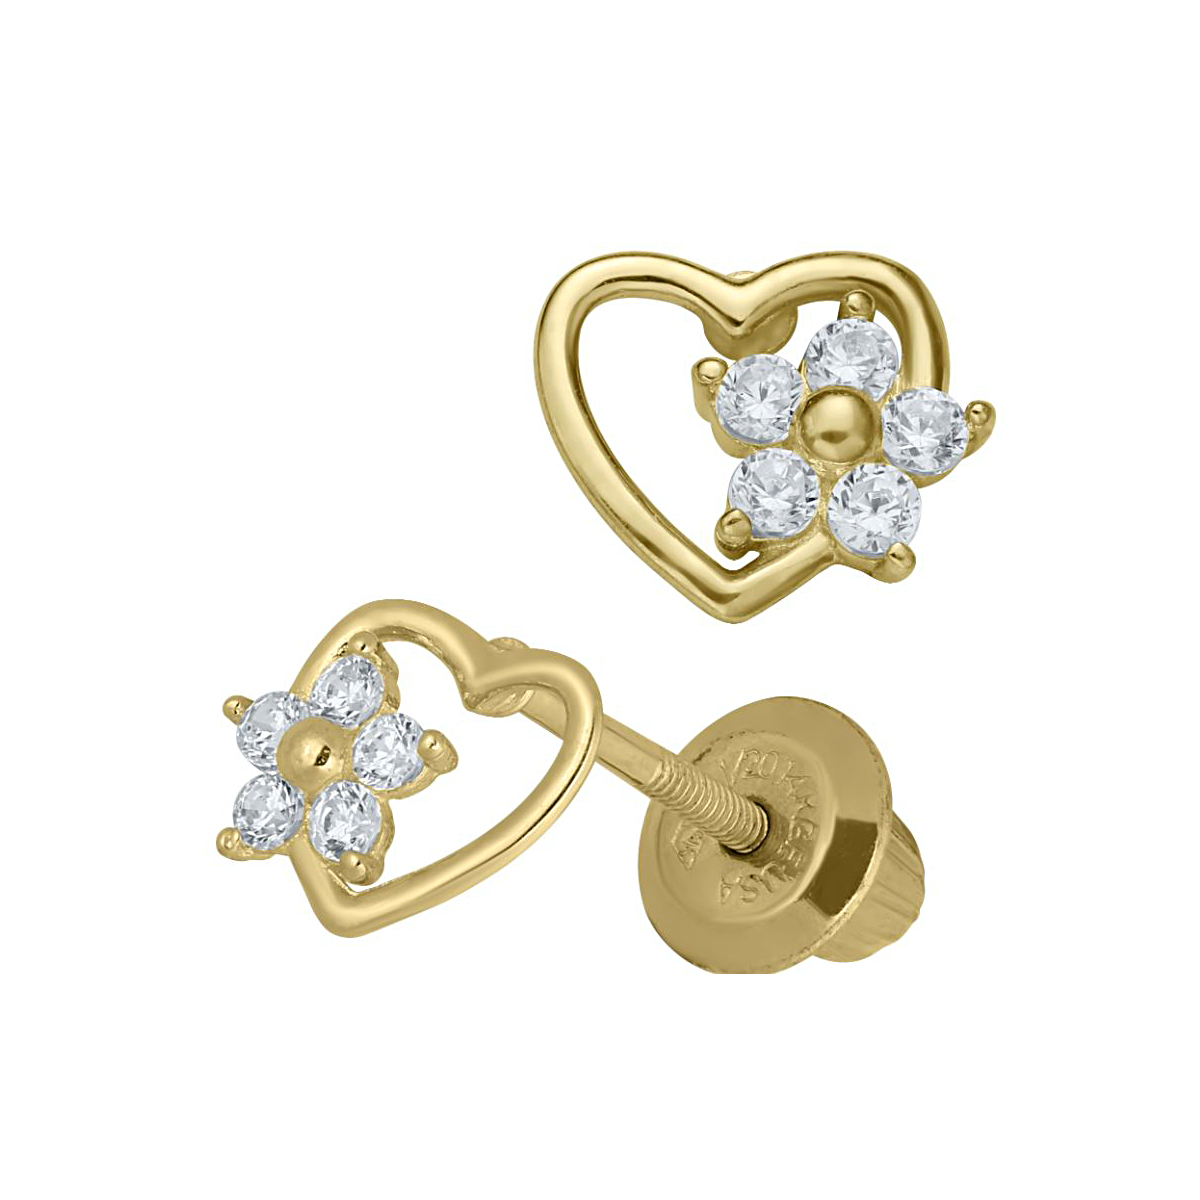 Baby's 14 Karat Yellow Gold Open Heart with White Cubic Zirconia Flower Earrings